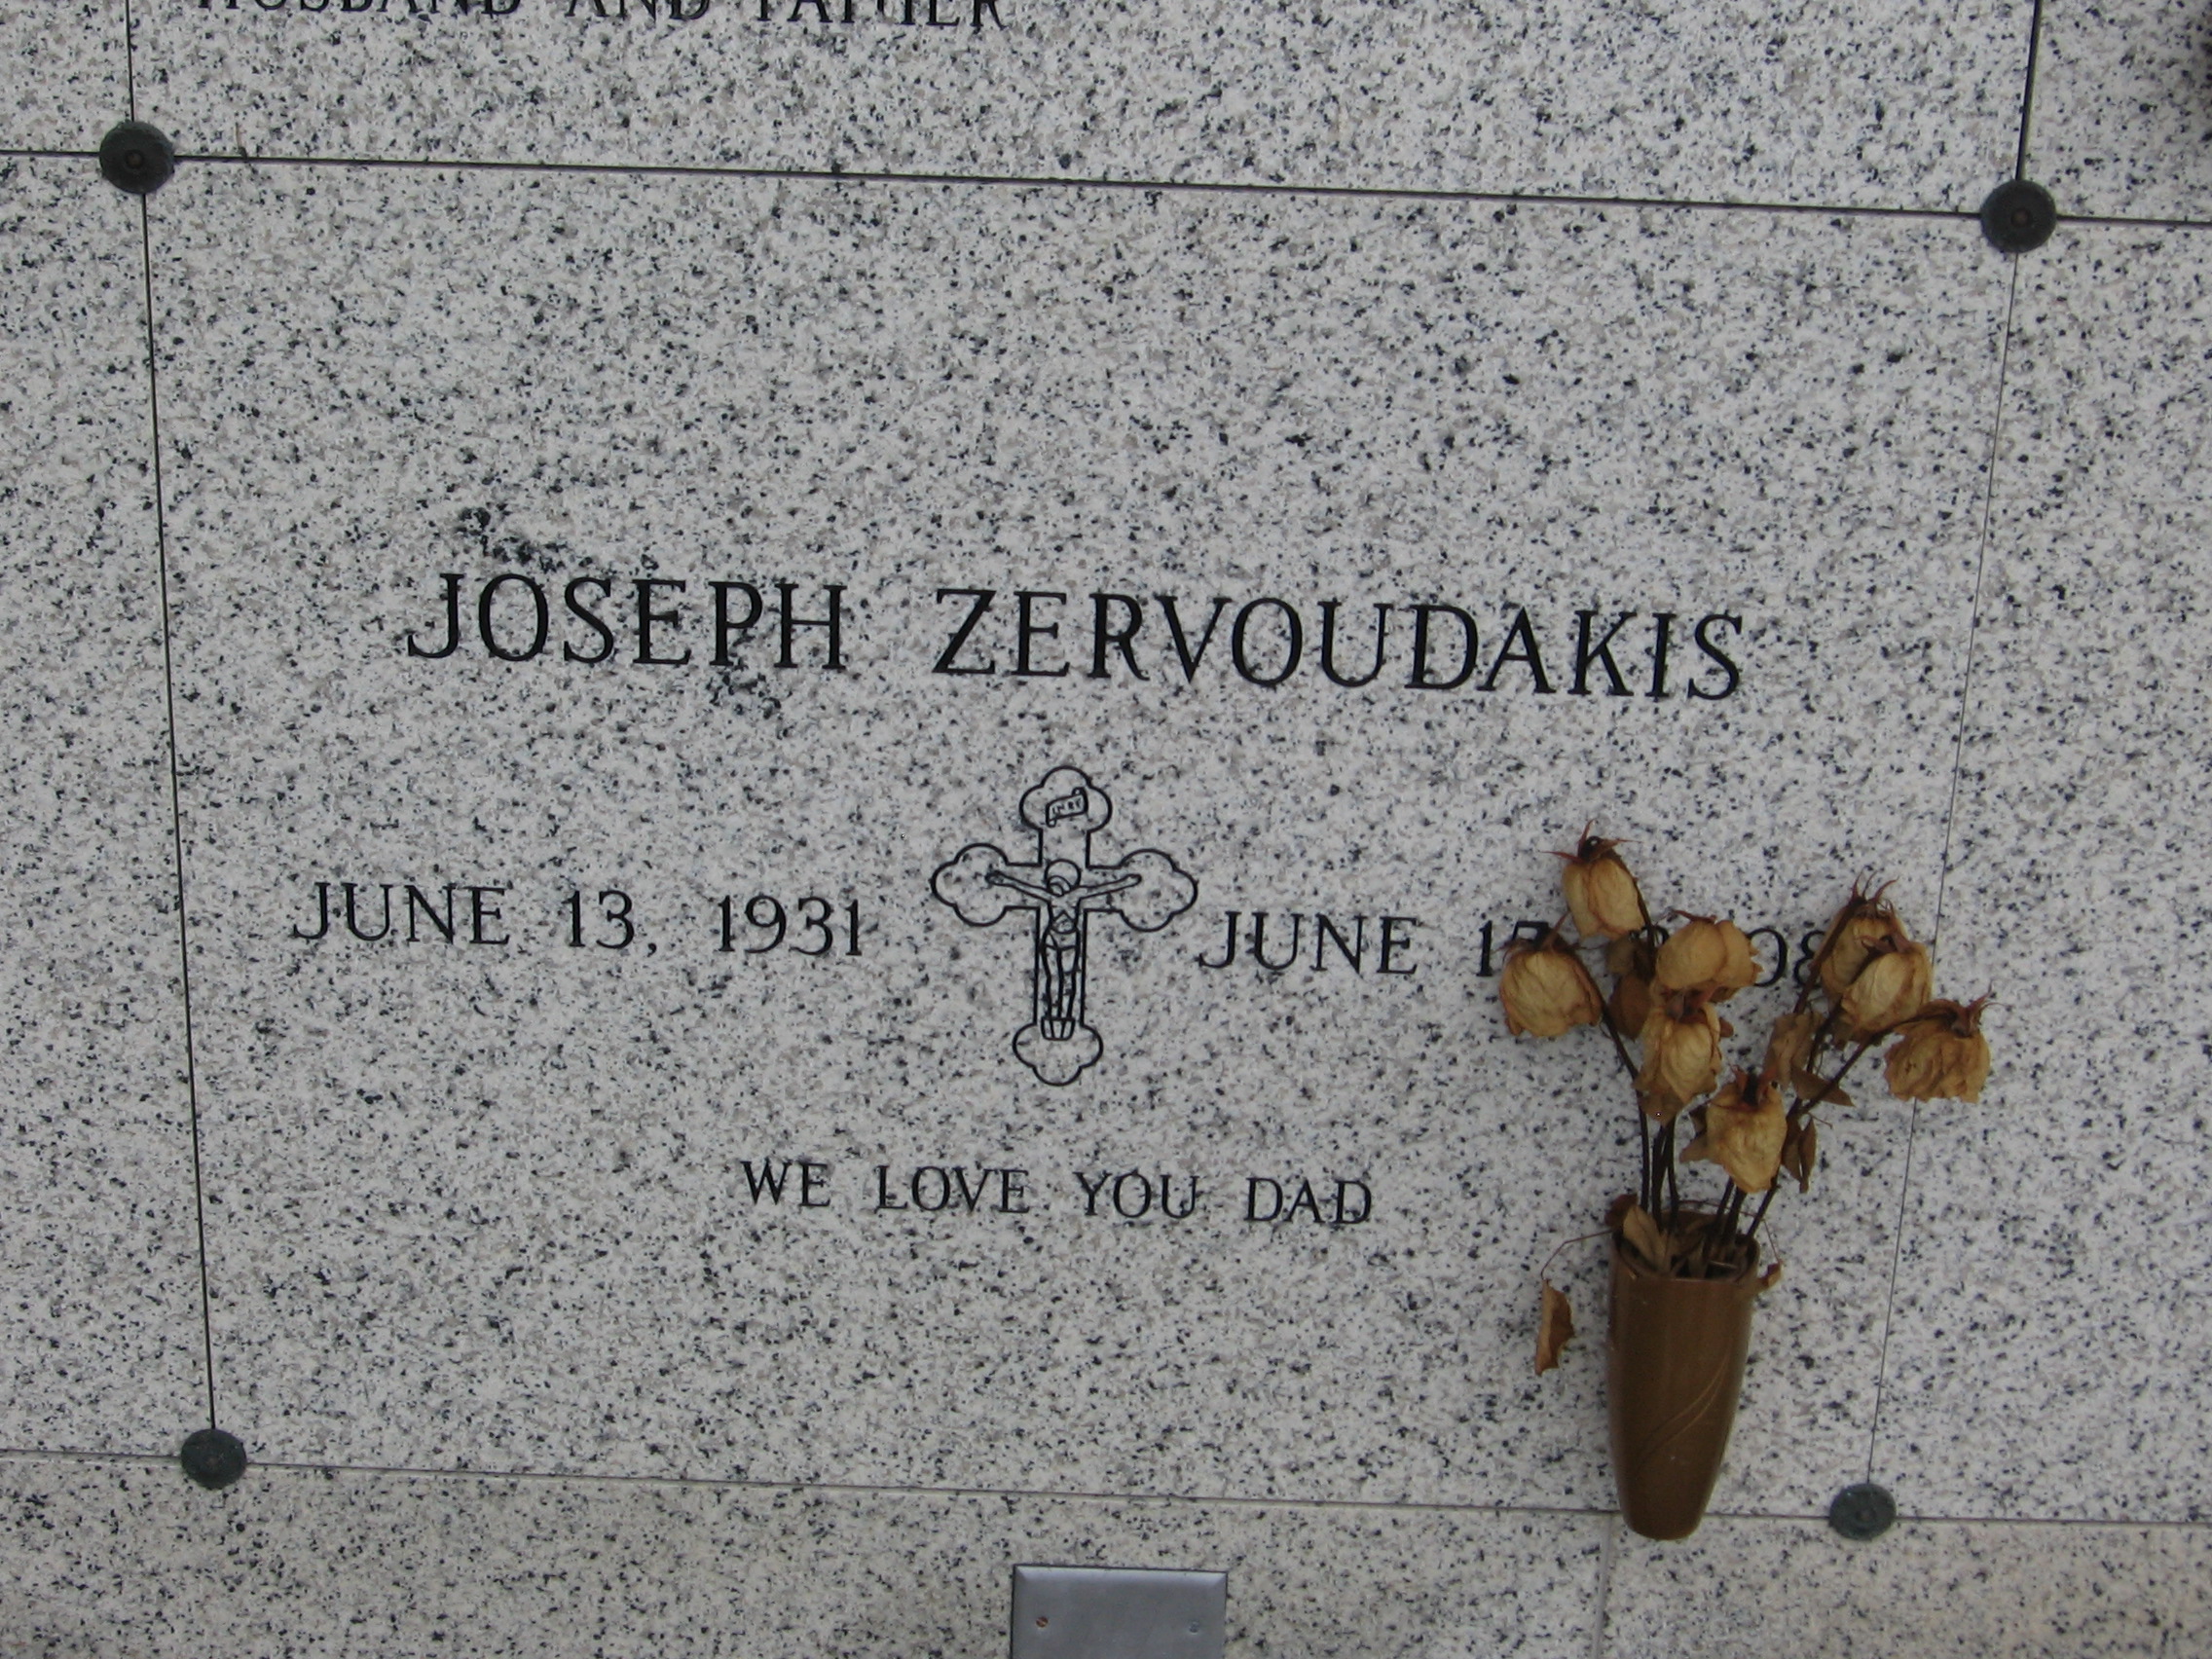 Joseph Zervoudakis